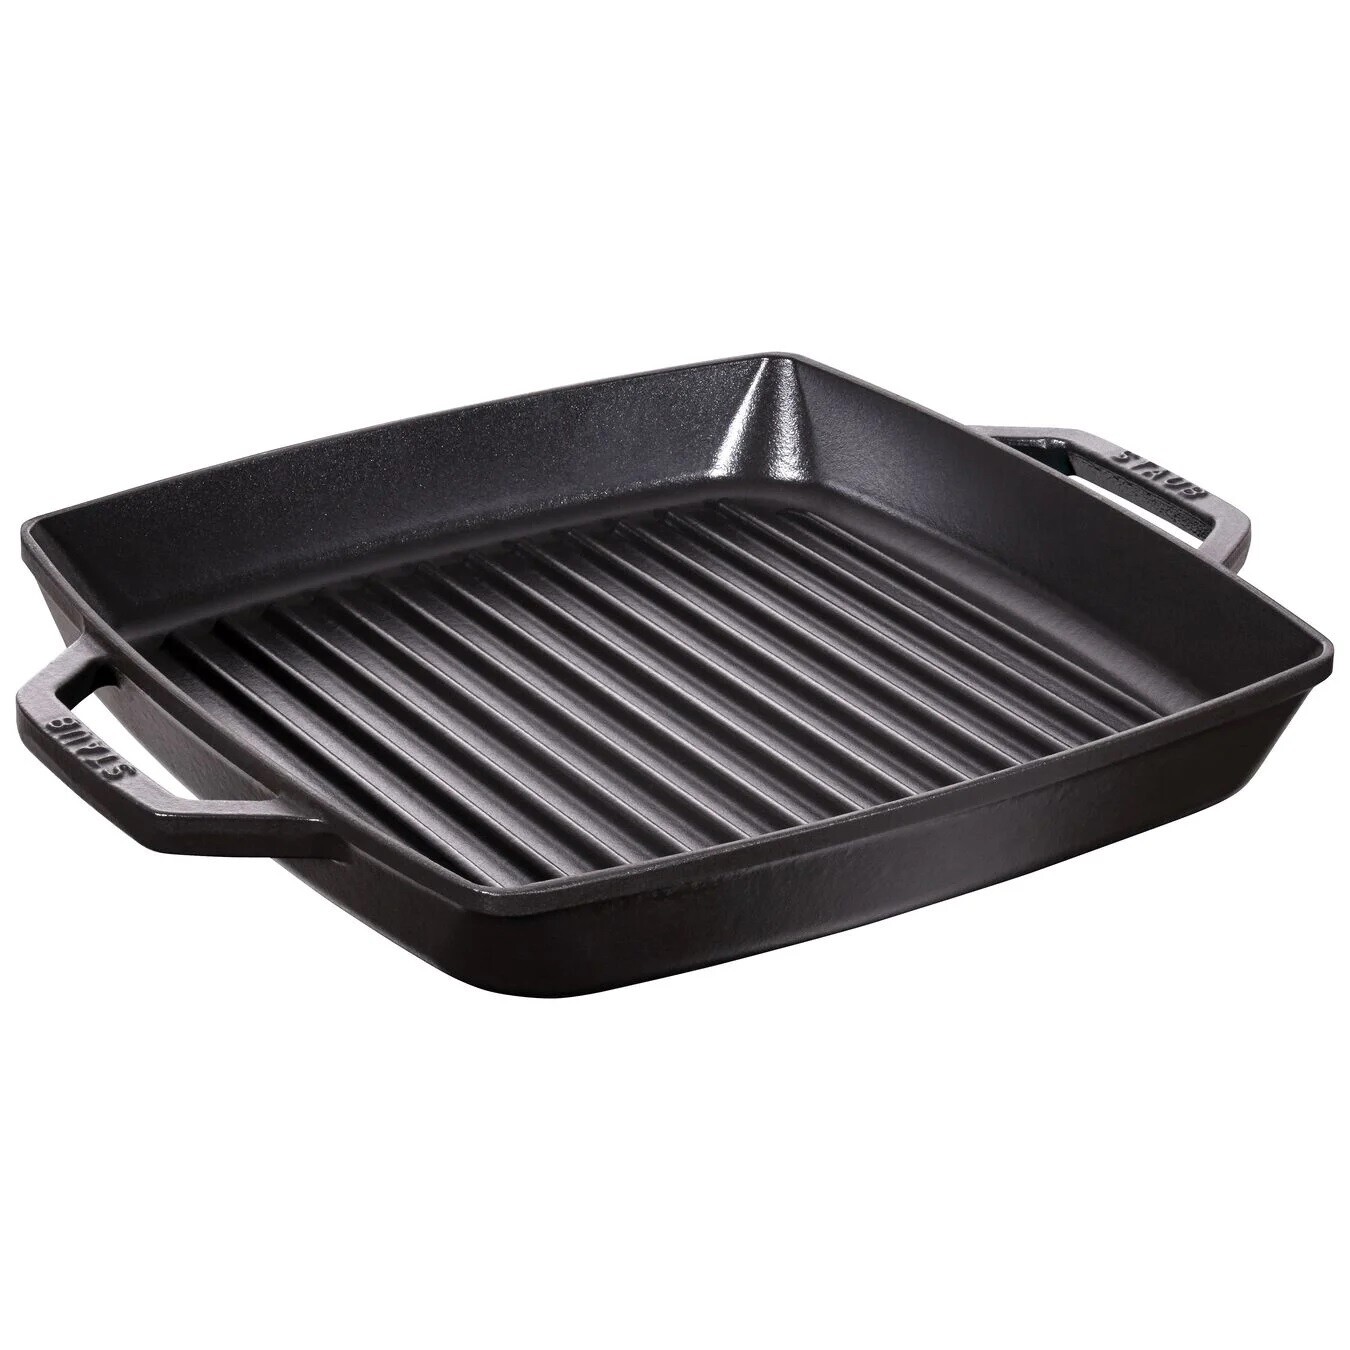 STAUB 'grill pans' gietijzeren grillpan 28cm zwart  PROMO 149,00 -20%